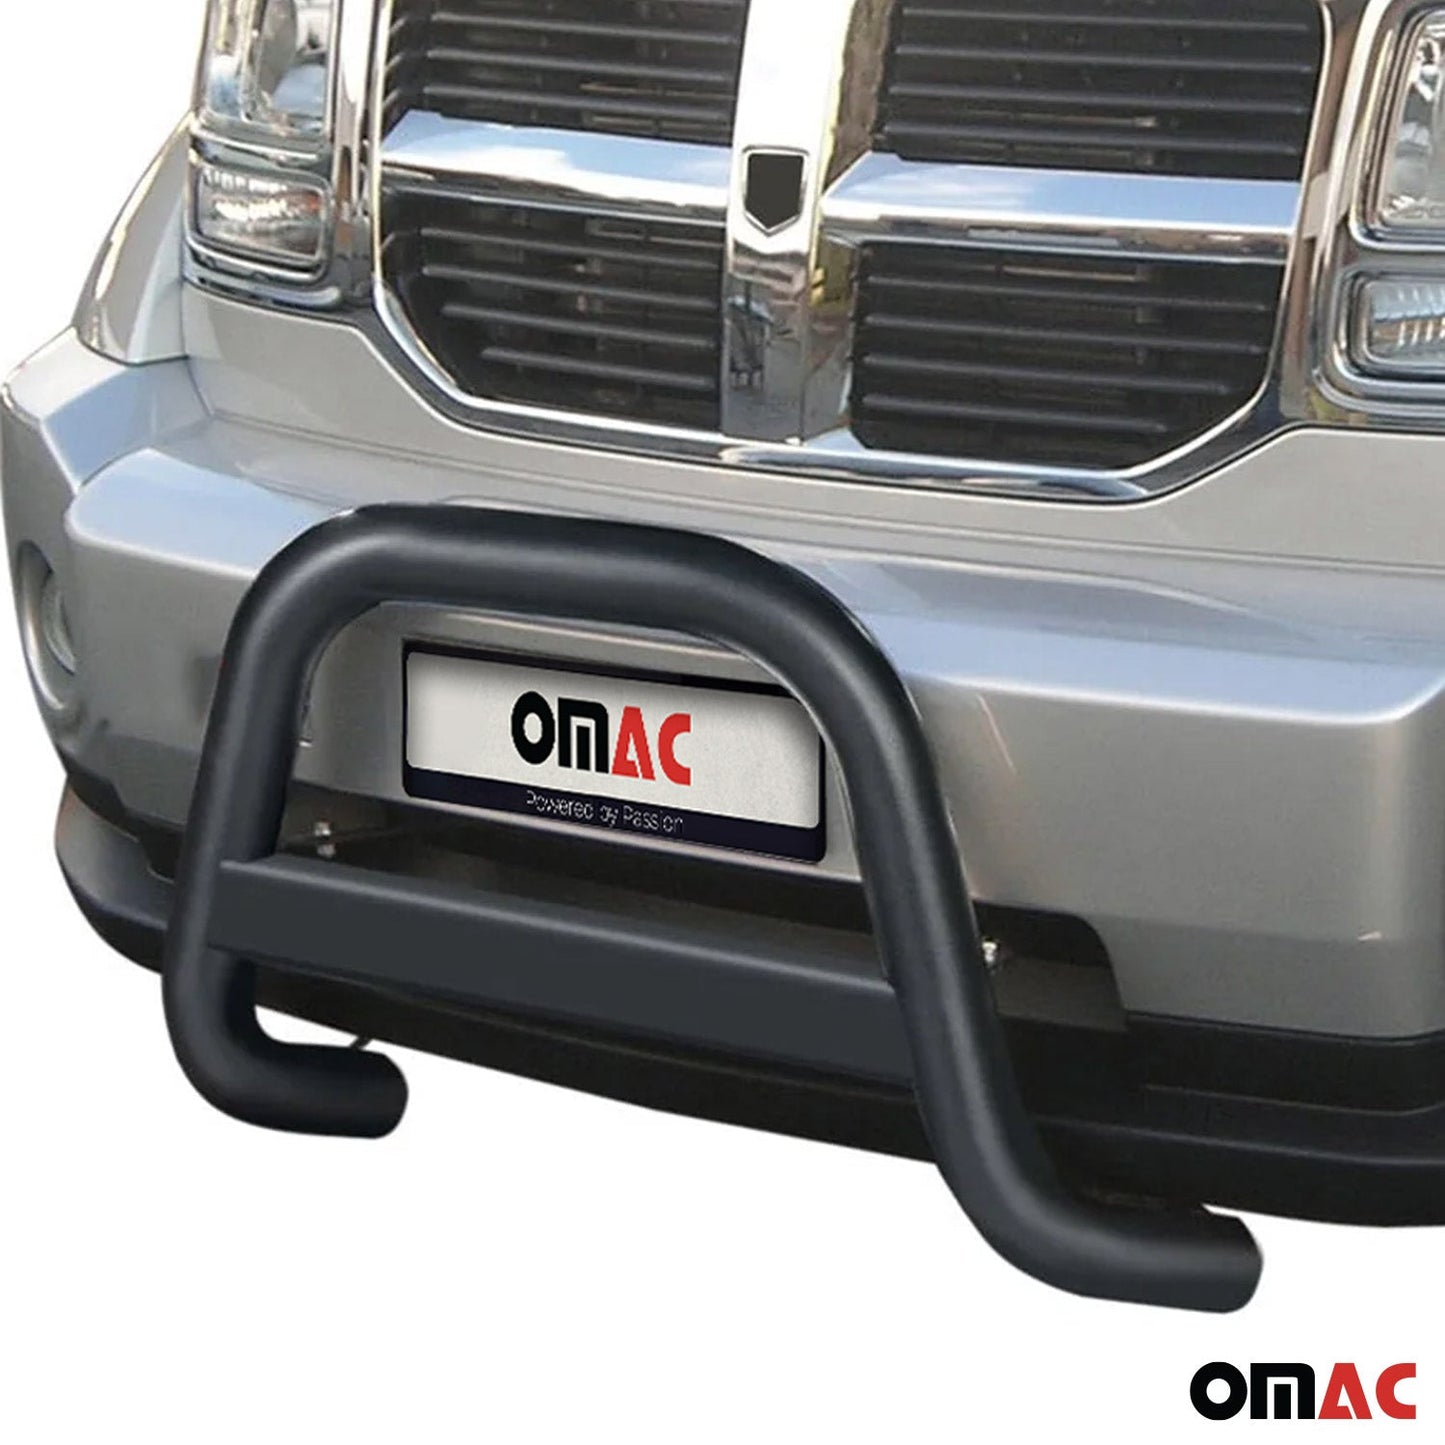 OMAC Bull Bar Push Front Bumper Grille for Dodge Nitro 2007-2012 Black 1 Pc 2401MSBB066B